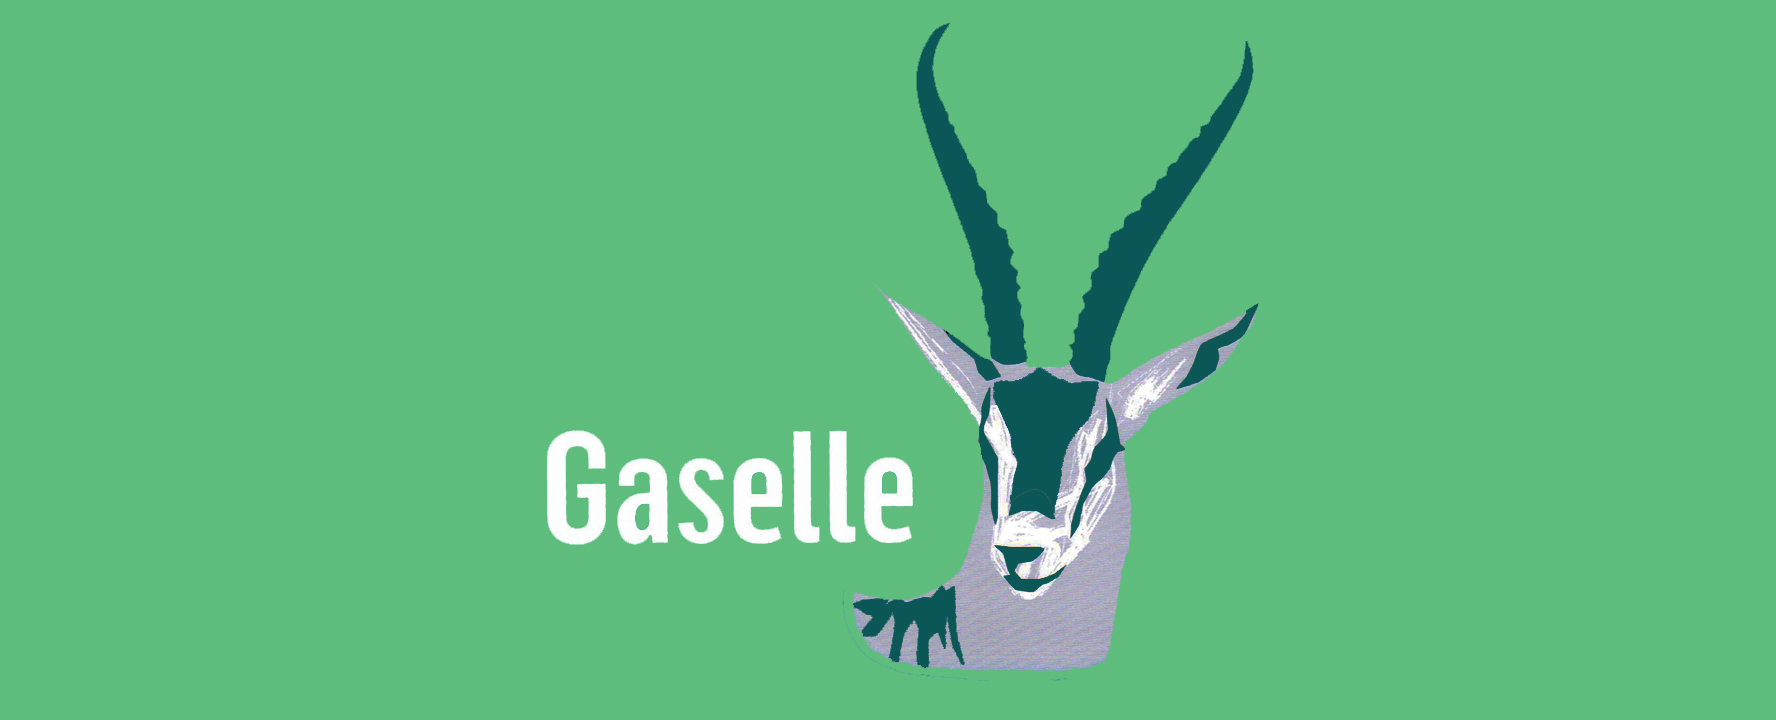 Geta Gaselle 2016